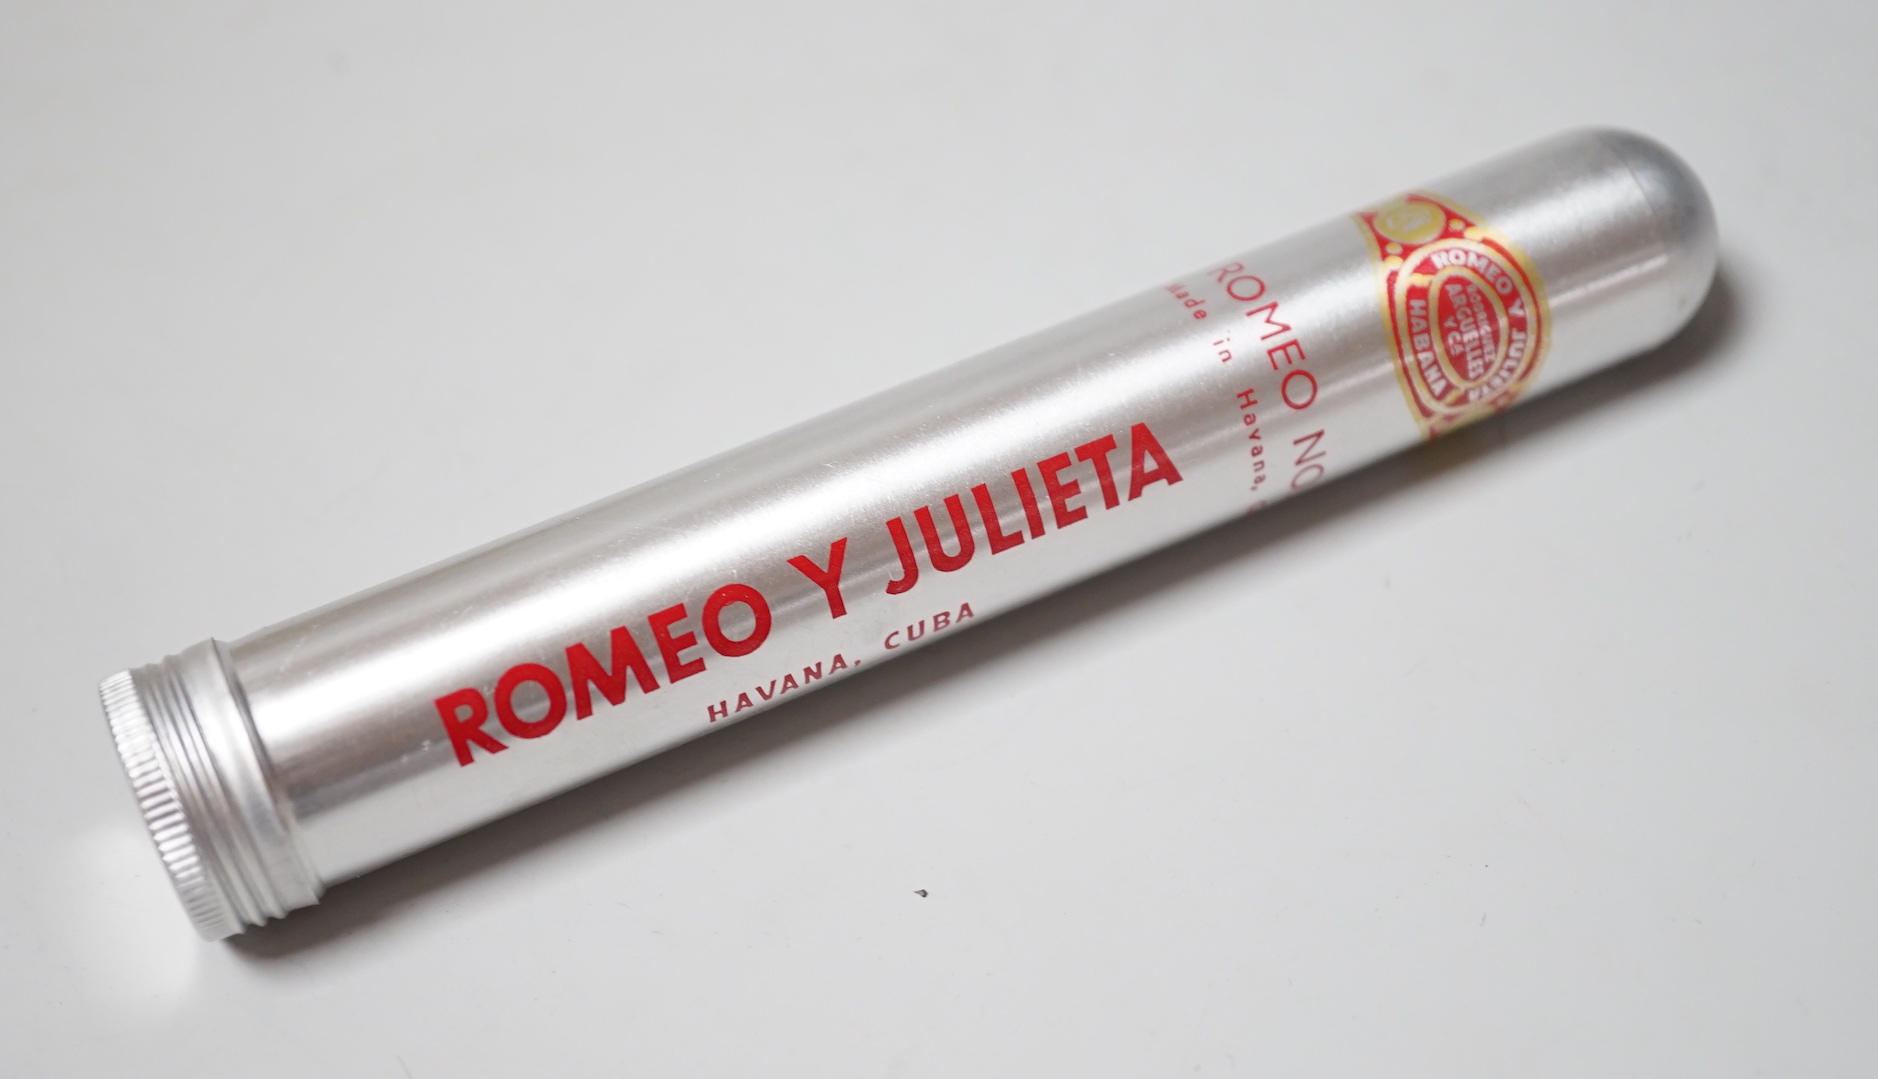 An incomplete Box of Romeo Y Julieta cigars